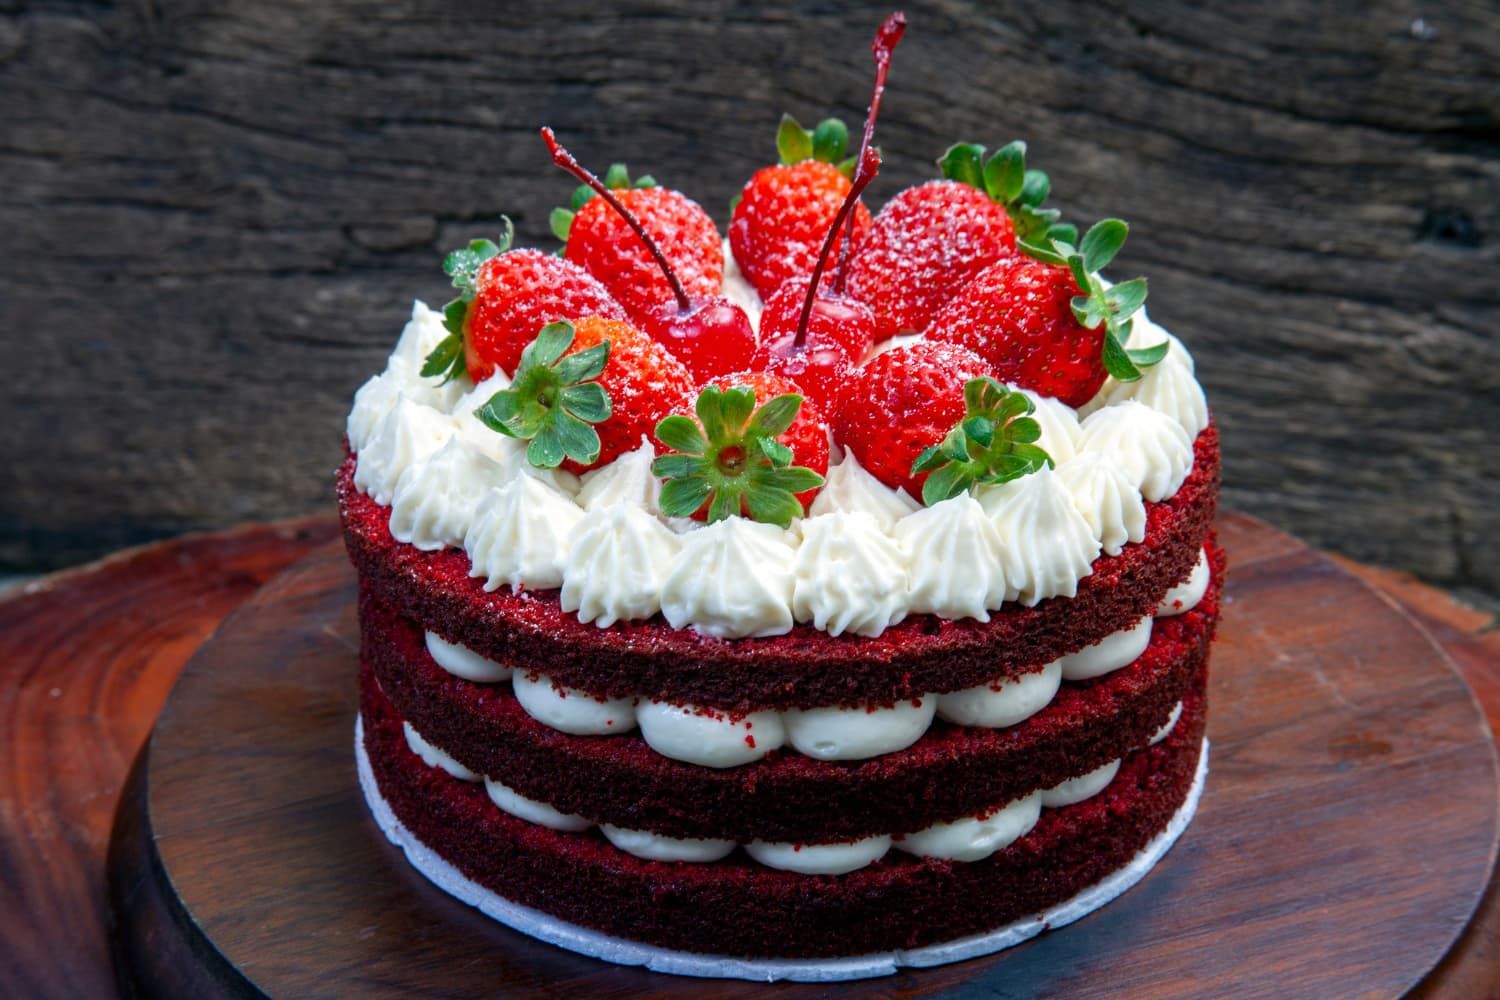 cake-d700935e Feasting / celebrating